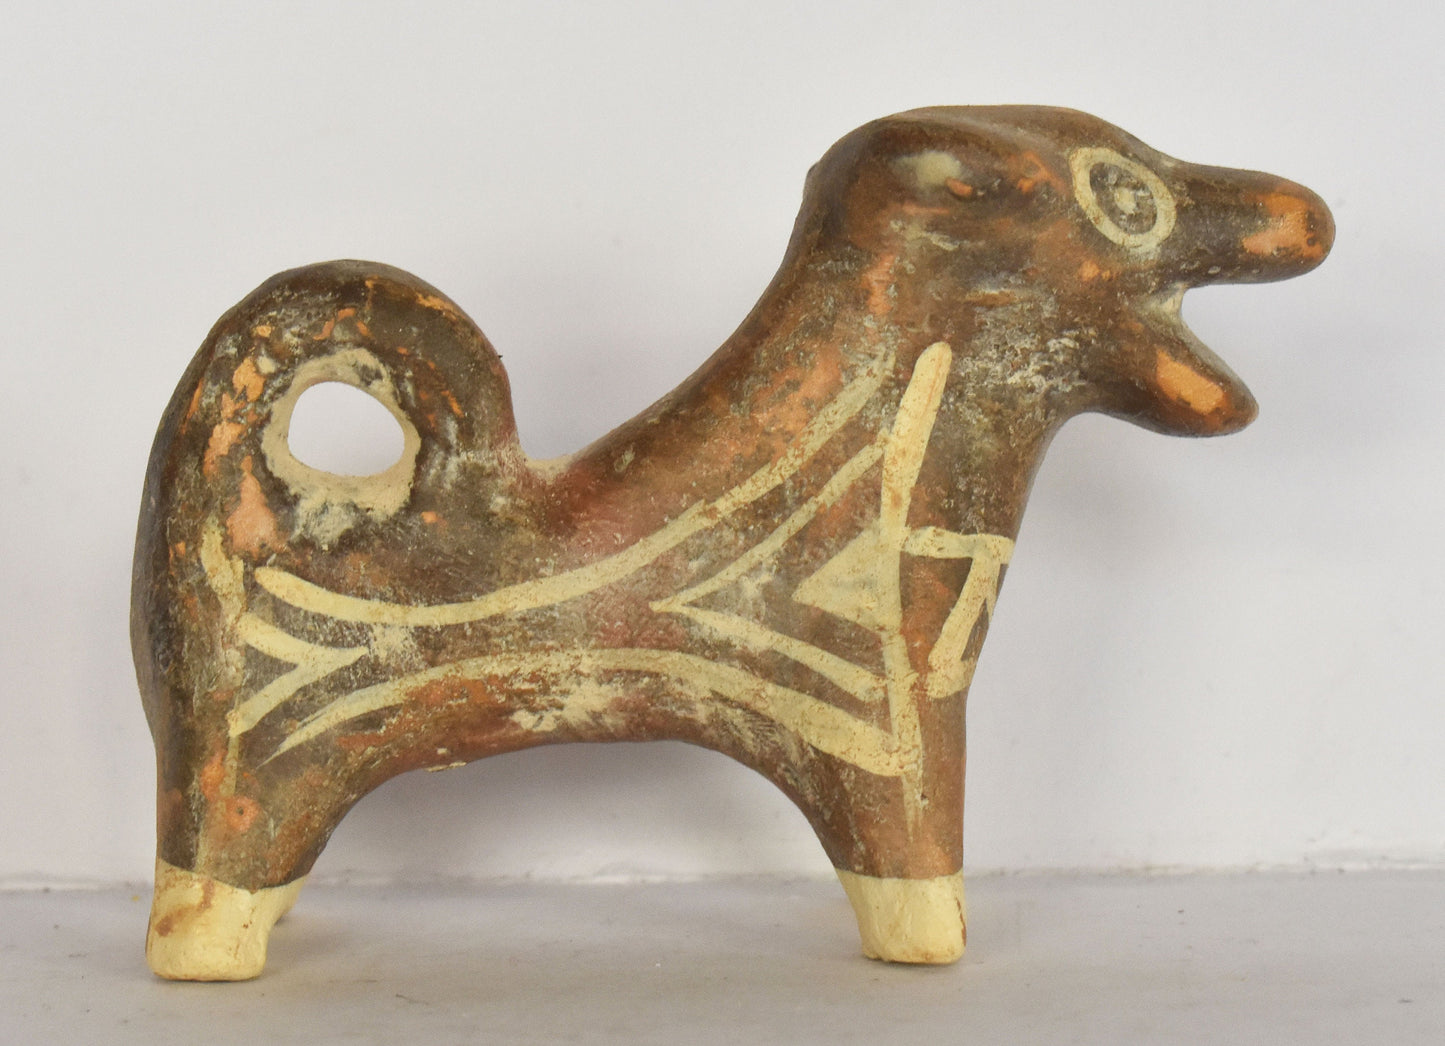 Idol of a Dog -  Mycenae - 1100 BC - Symbol of Loyalty, Vigilance, Guardian, Protector - Miniature - Museum Reproduction - Ceramic Artifact